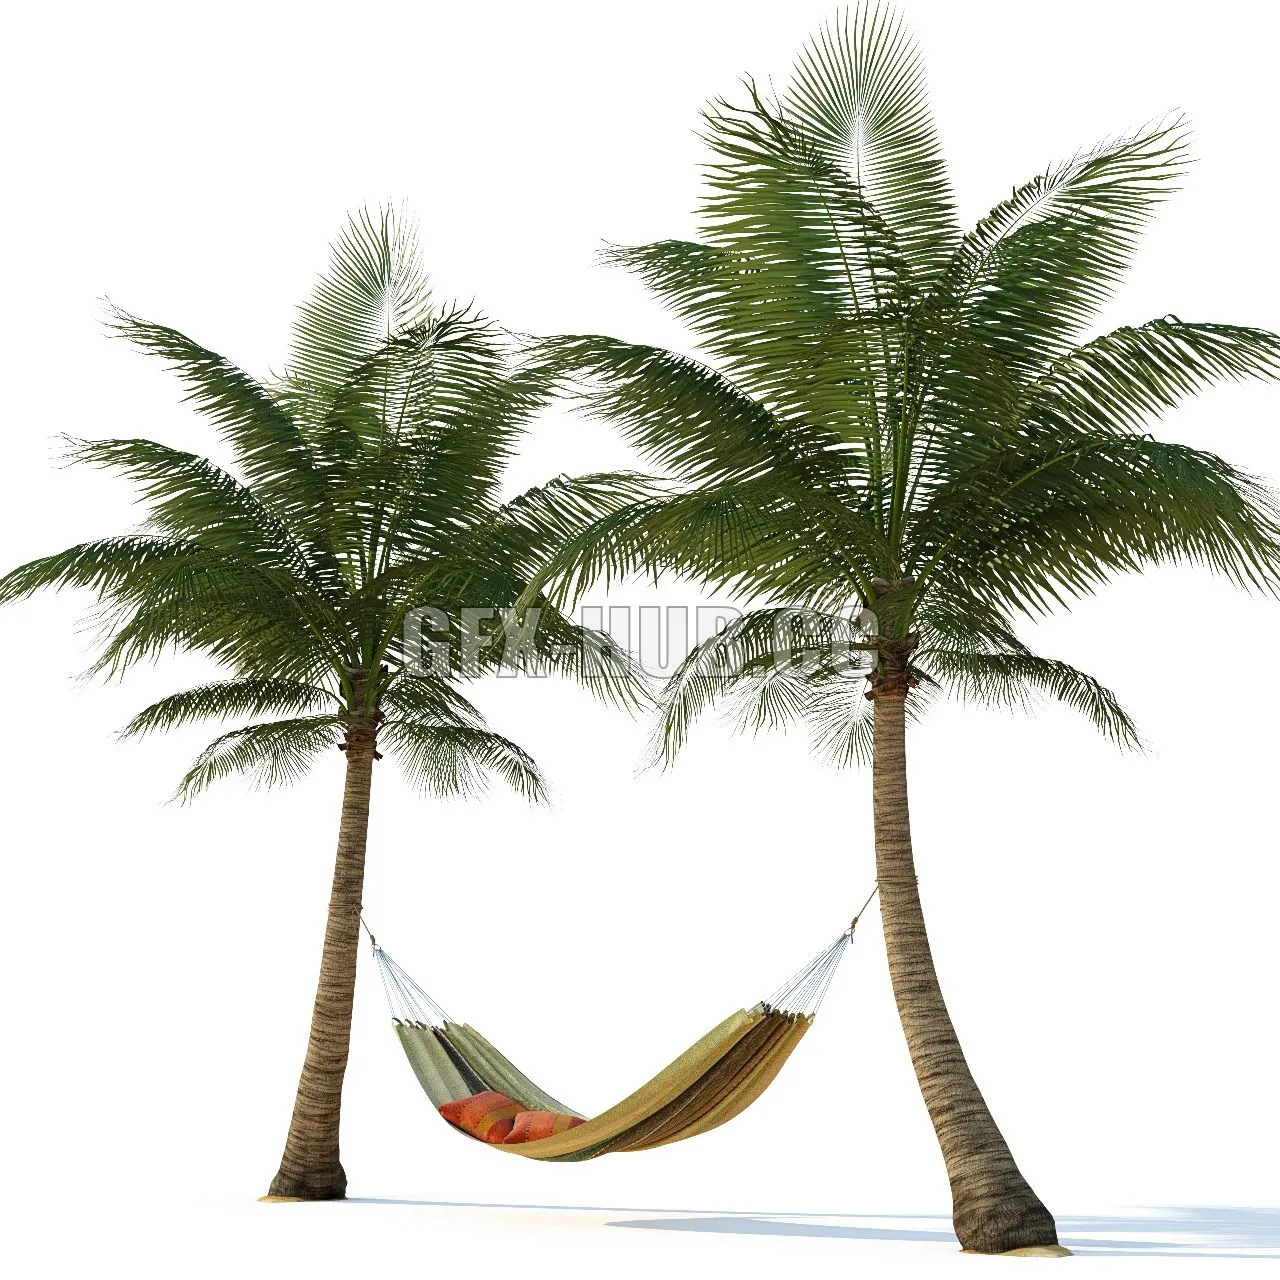 FURNITURE 3D MODELS – Hammock on Palm Trees